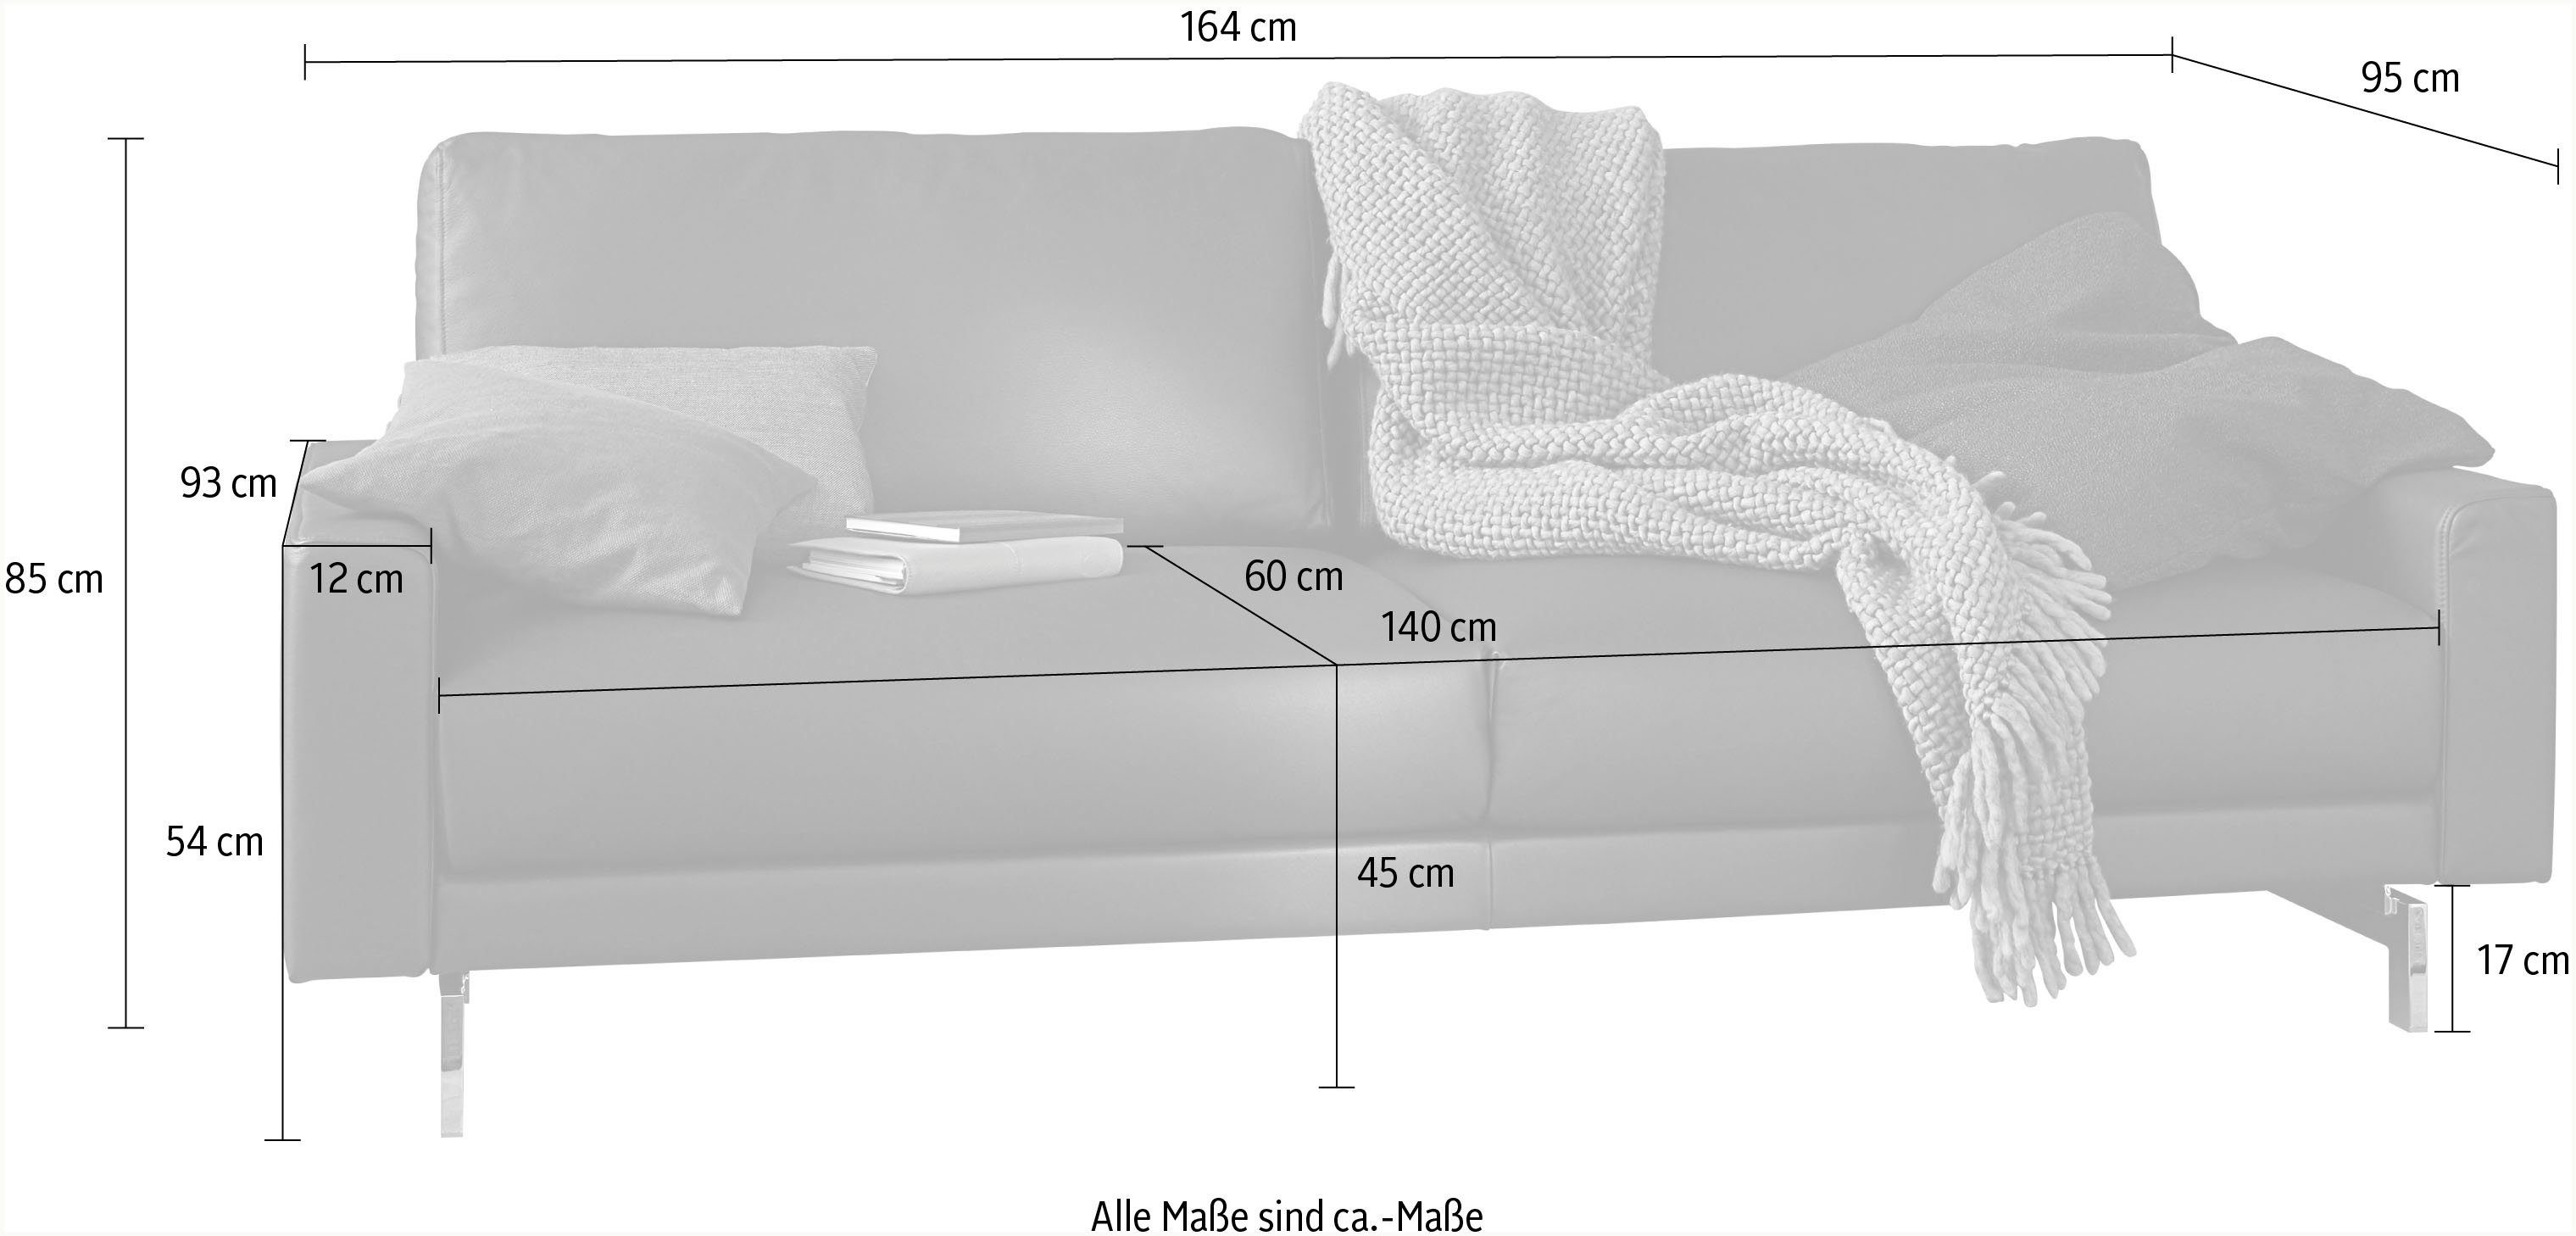 Breite cm Armlehne Fuß hs.450, glänzend, niedrig, sofa 2-Sitzer chromfarben 164 hülsta